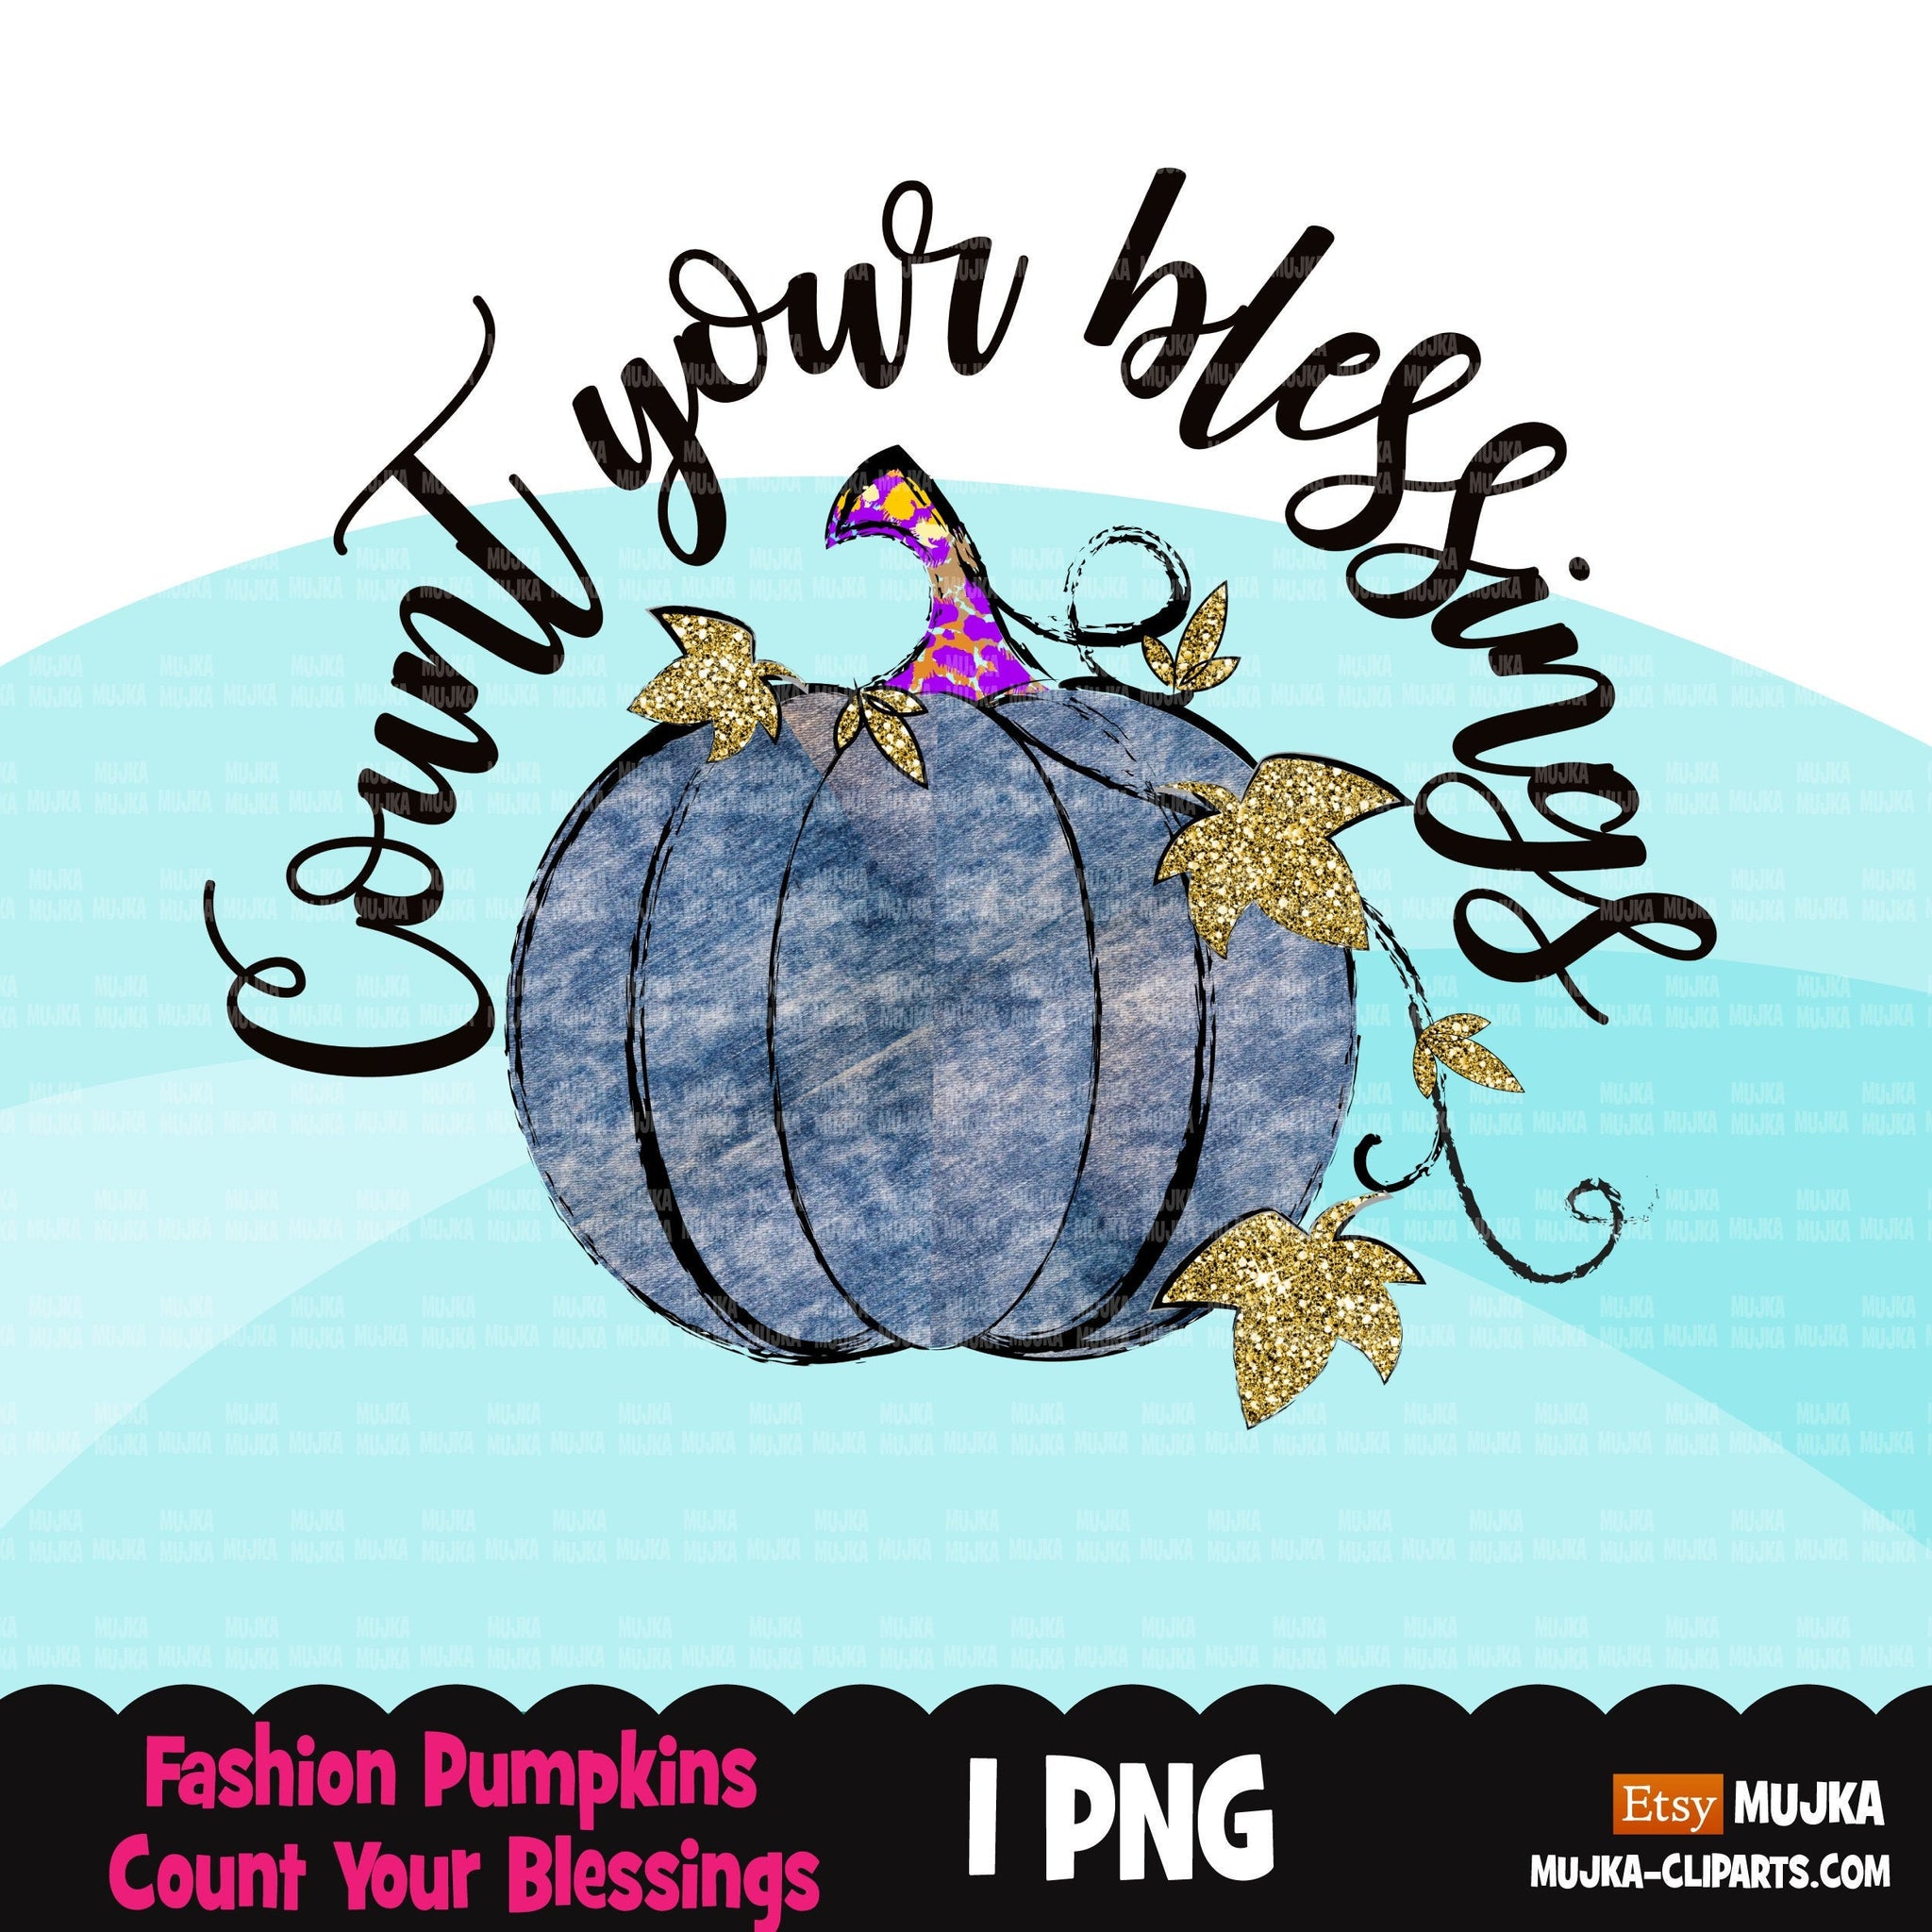 Count your blessings png, Fall pumpkins sublimation designs digital download, denim pumpkins, fall shirt designs, glitter pumpkin graphics